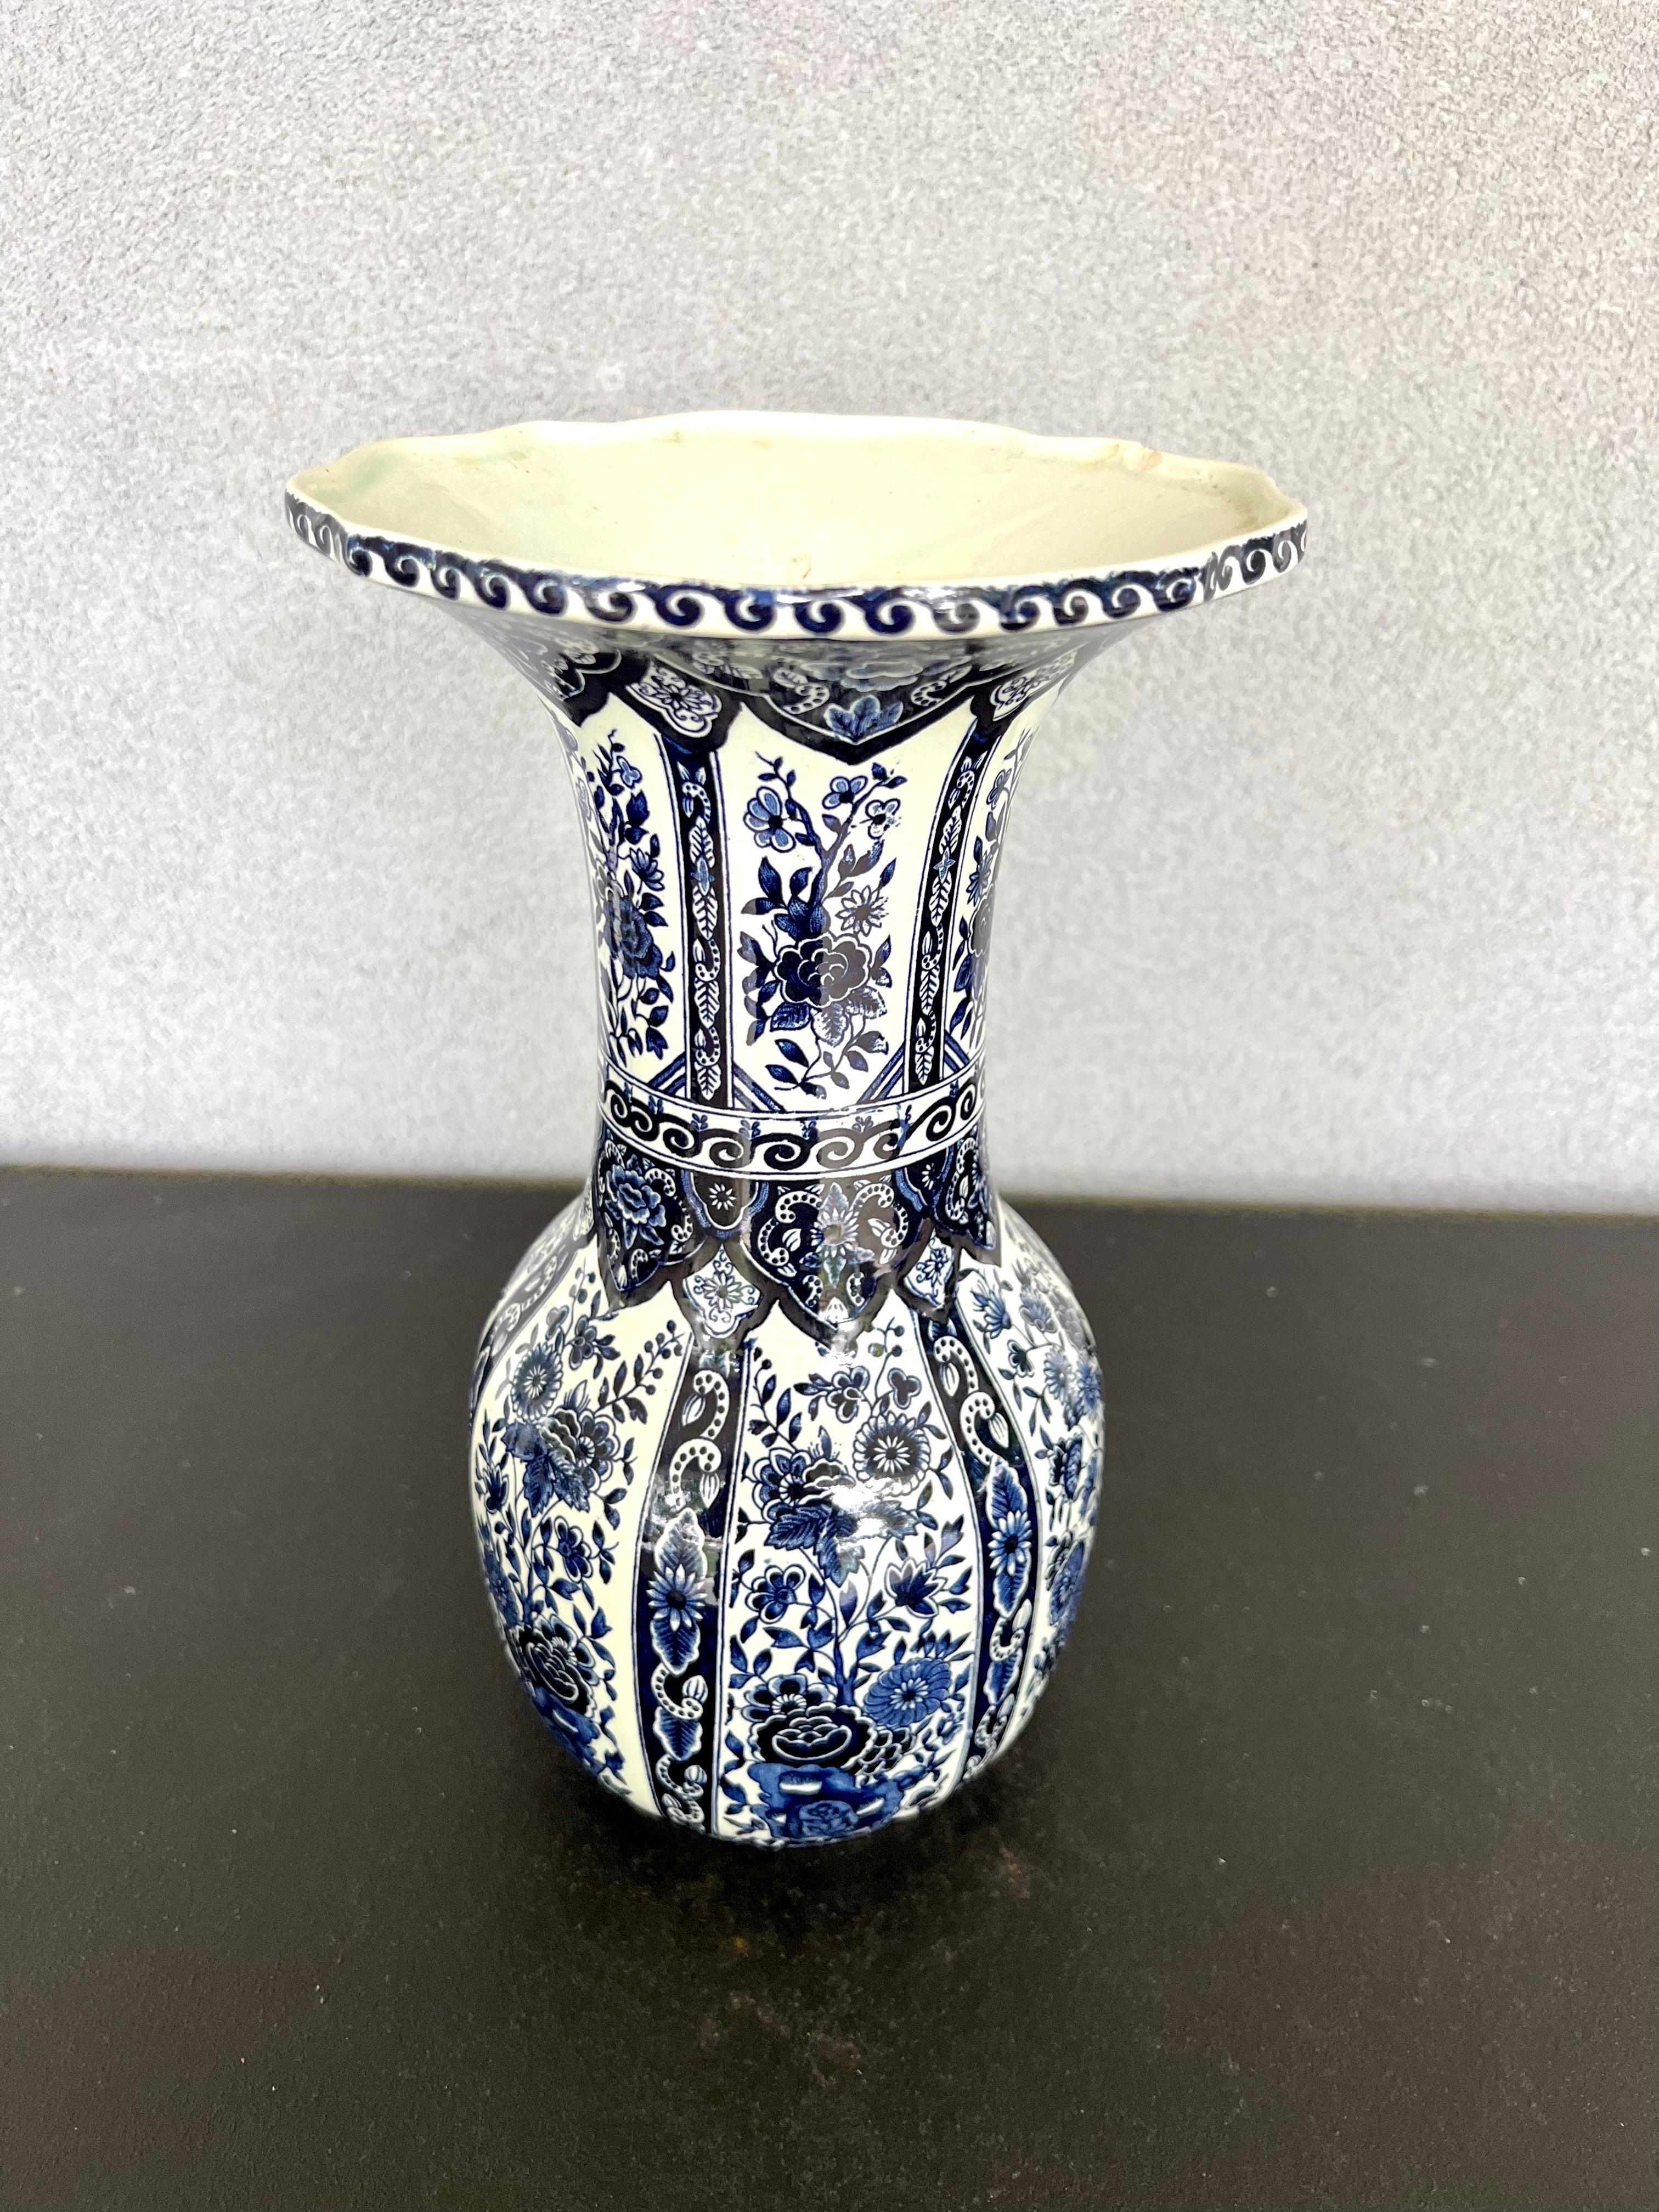 Vintage Belgium Delft Blue & White Vase by Boch for Royal Sphinx Holland For Sale 1